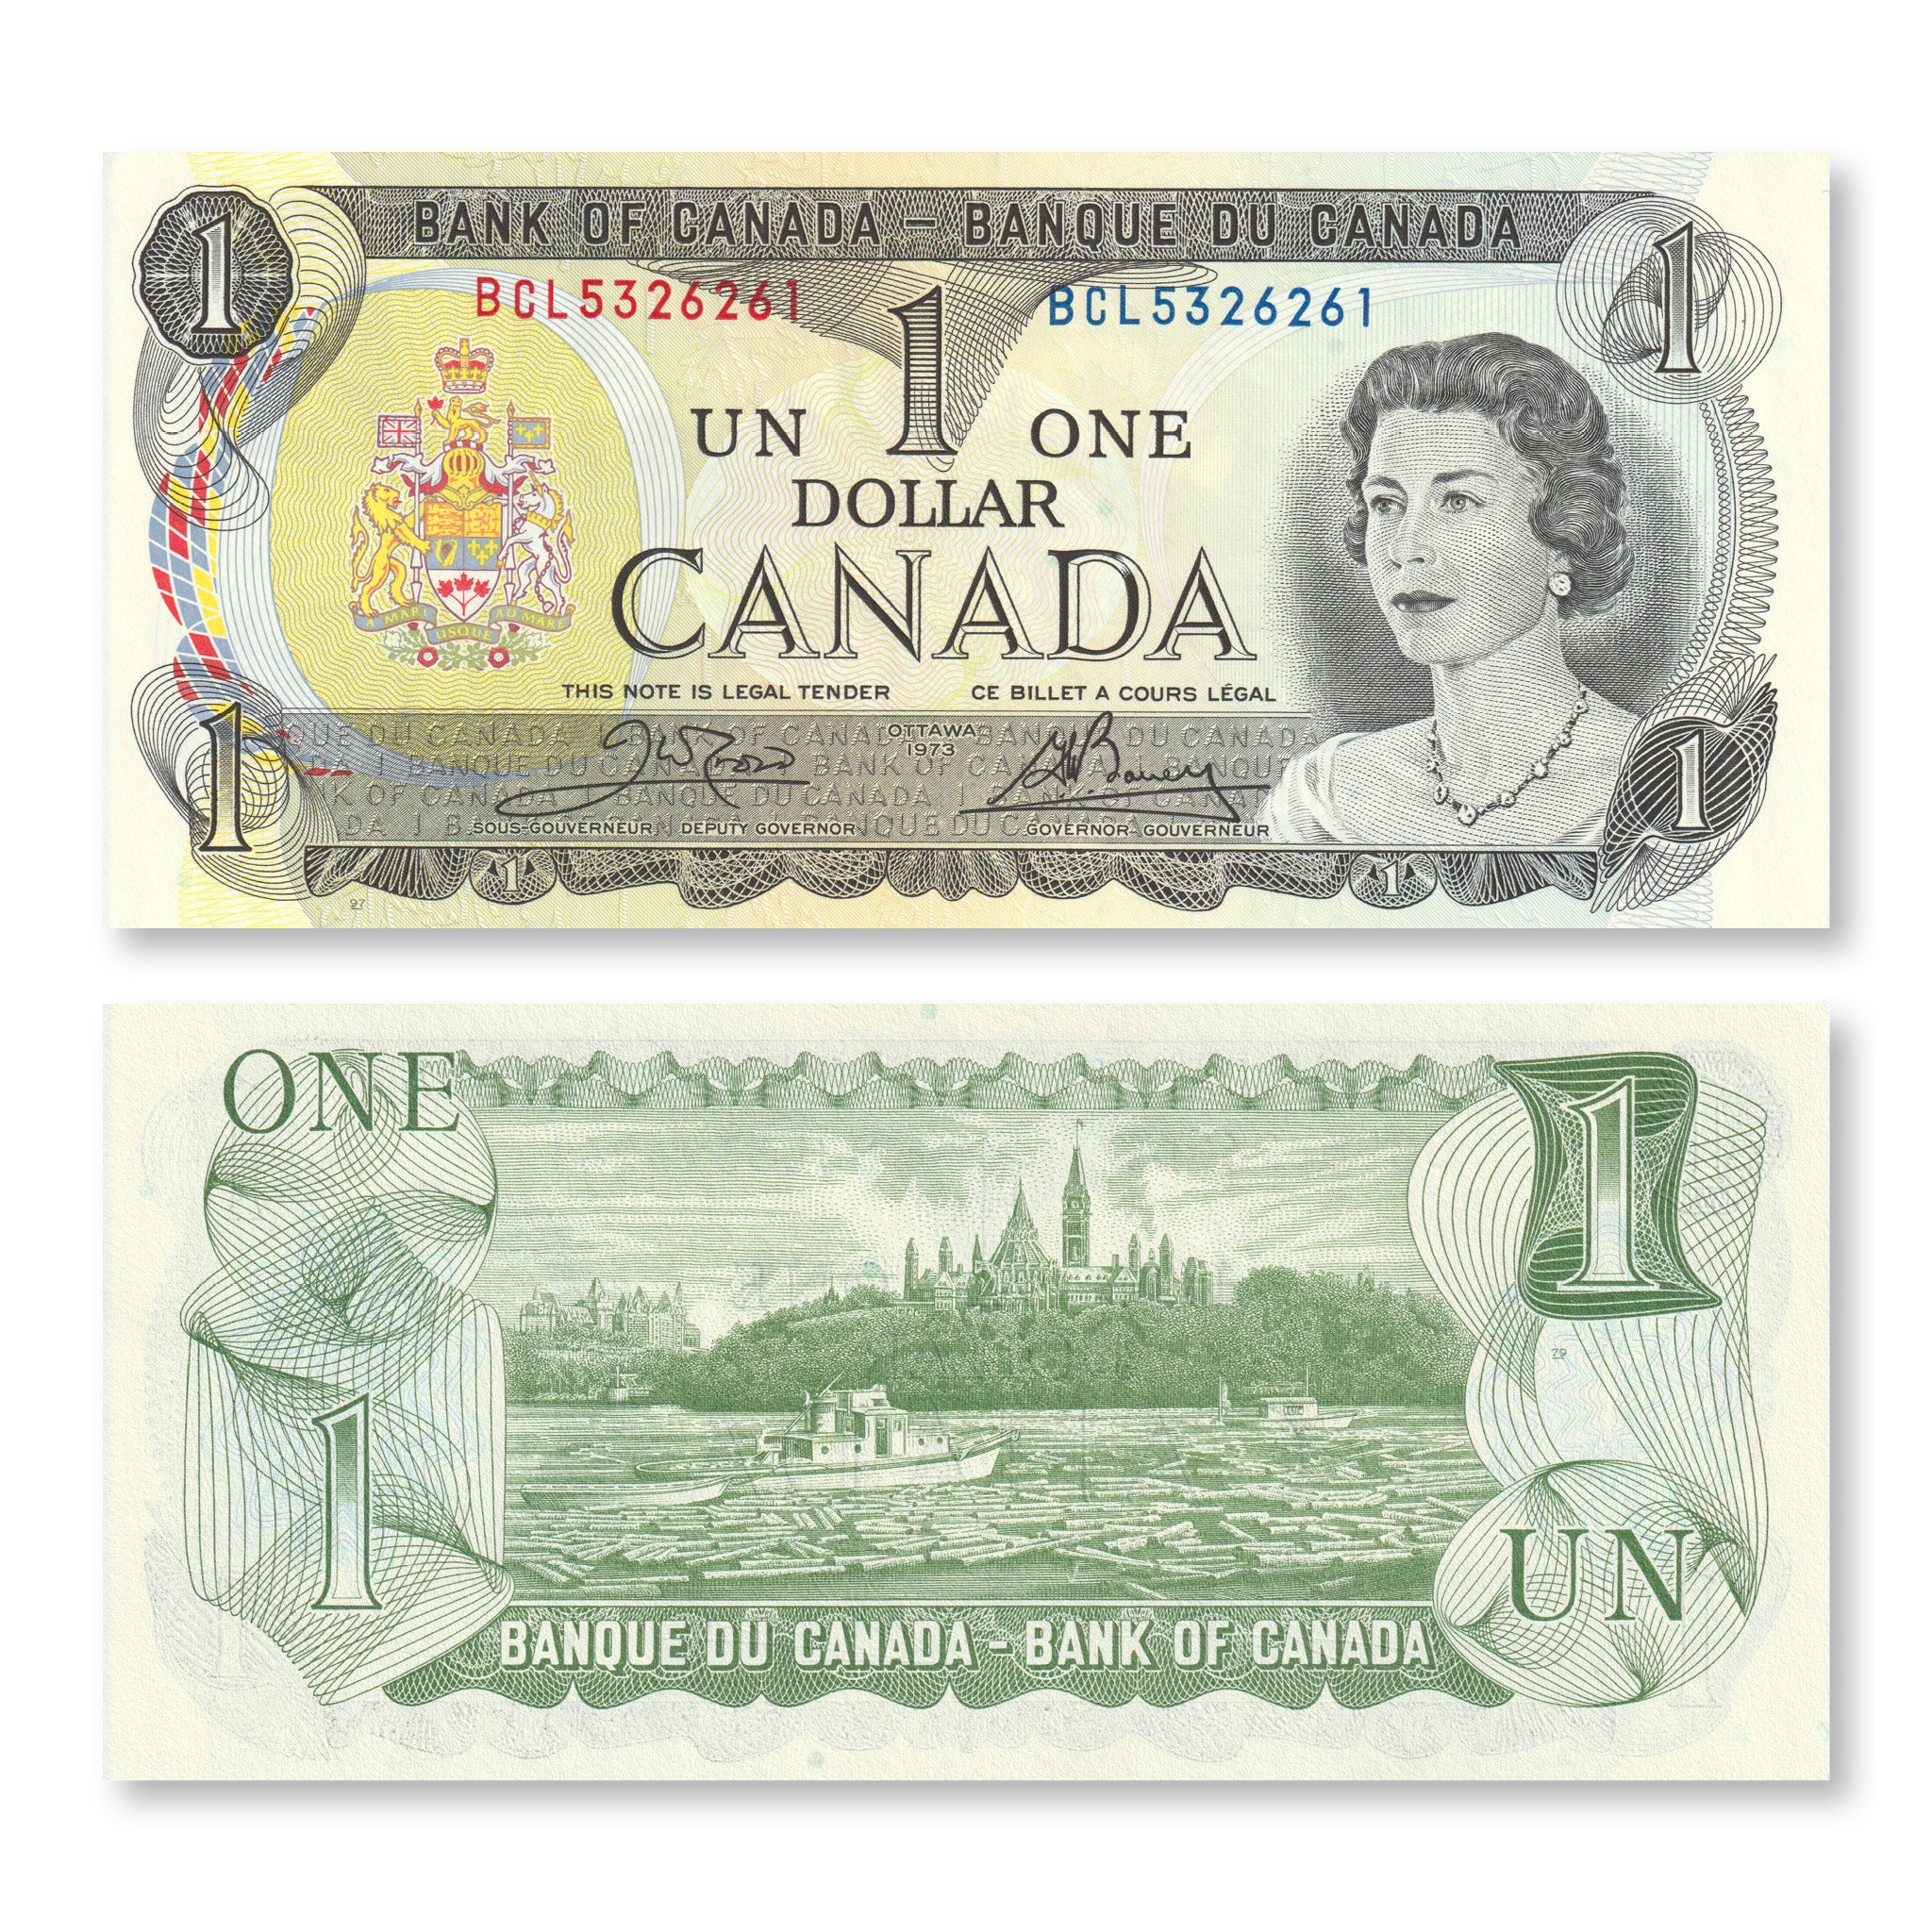 Canada 1 Dollar, 1973, B348a, P85a, UNC - Robert's World Money - World Banknotes